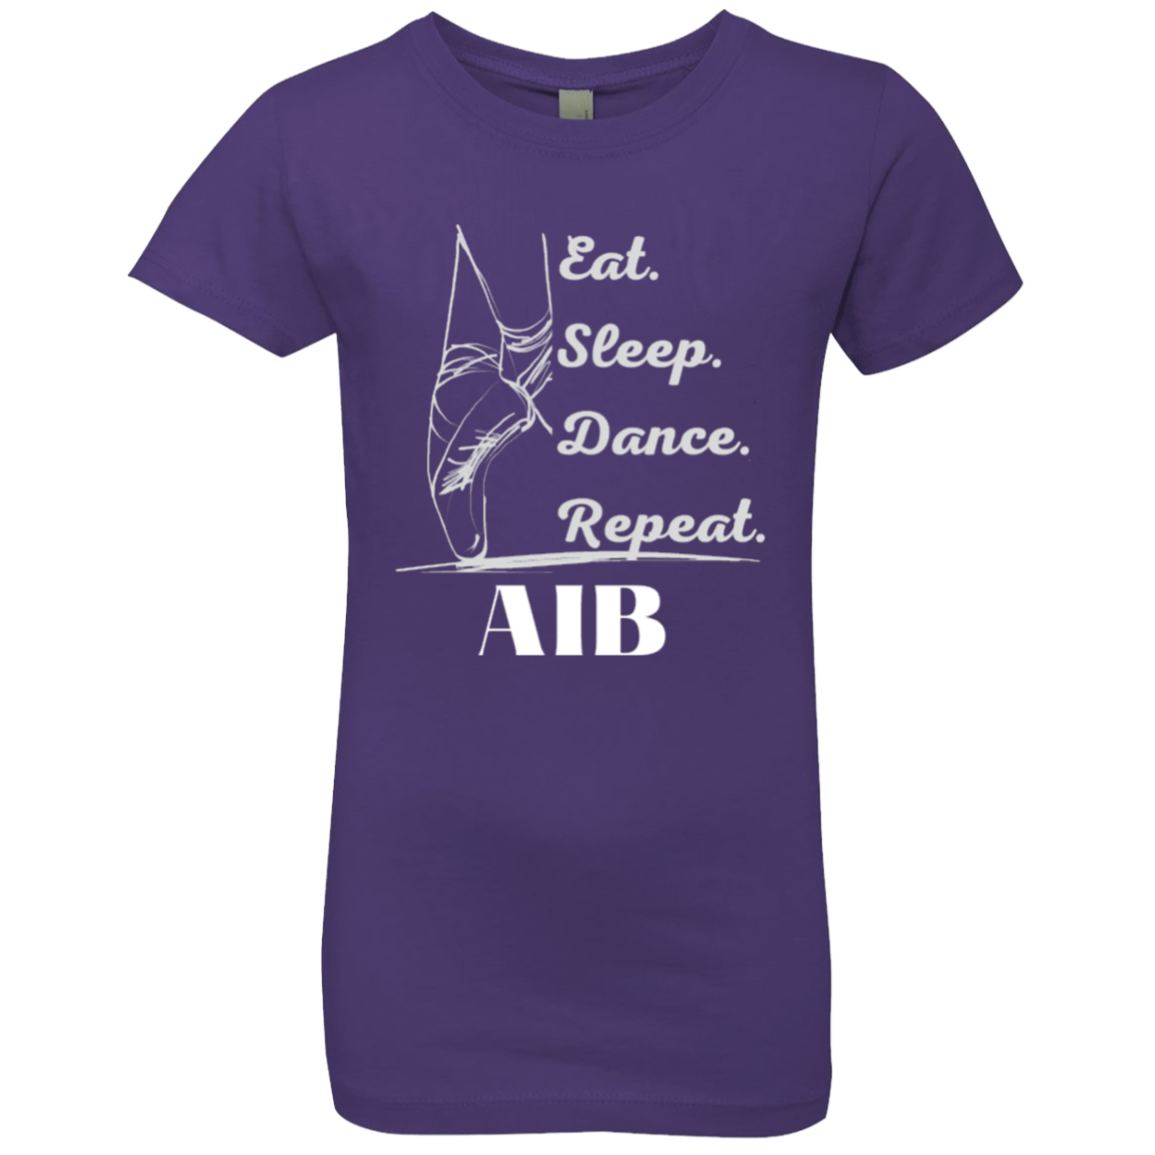 Eat. Sleep. Dance. Repeat. AIB. Girls' FittedT-Shirt